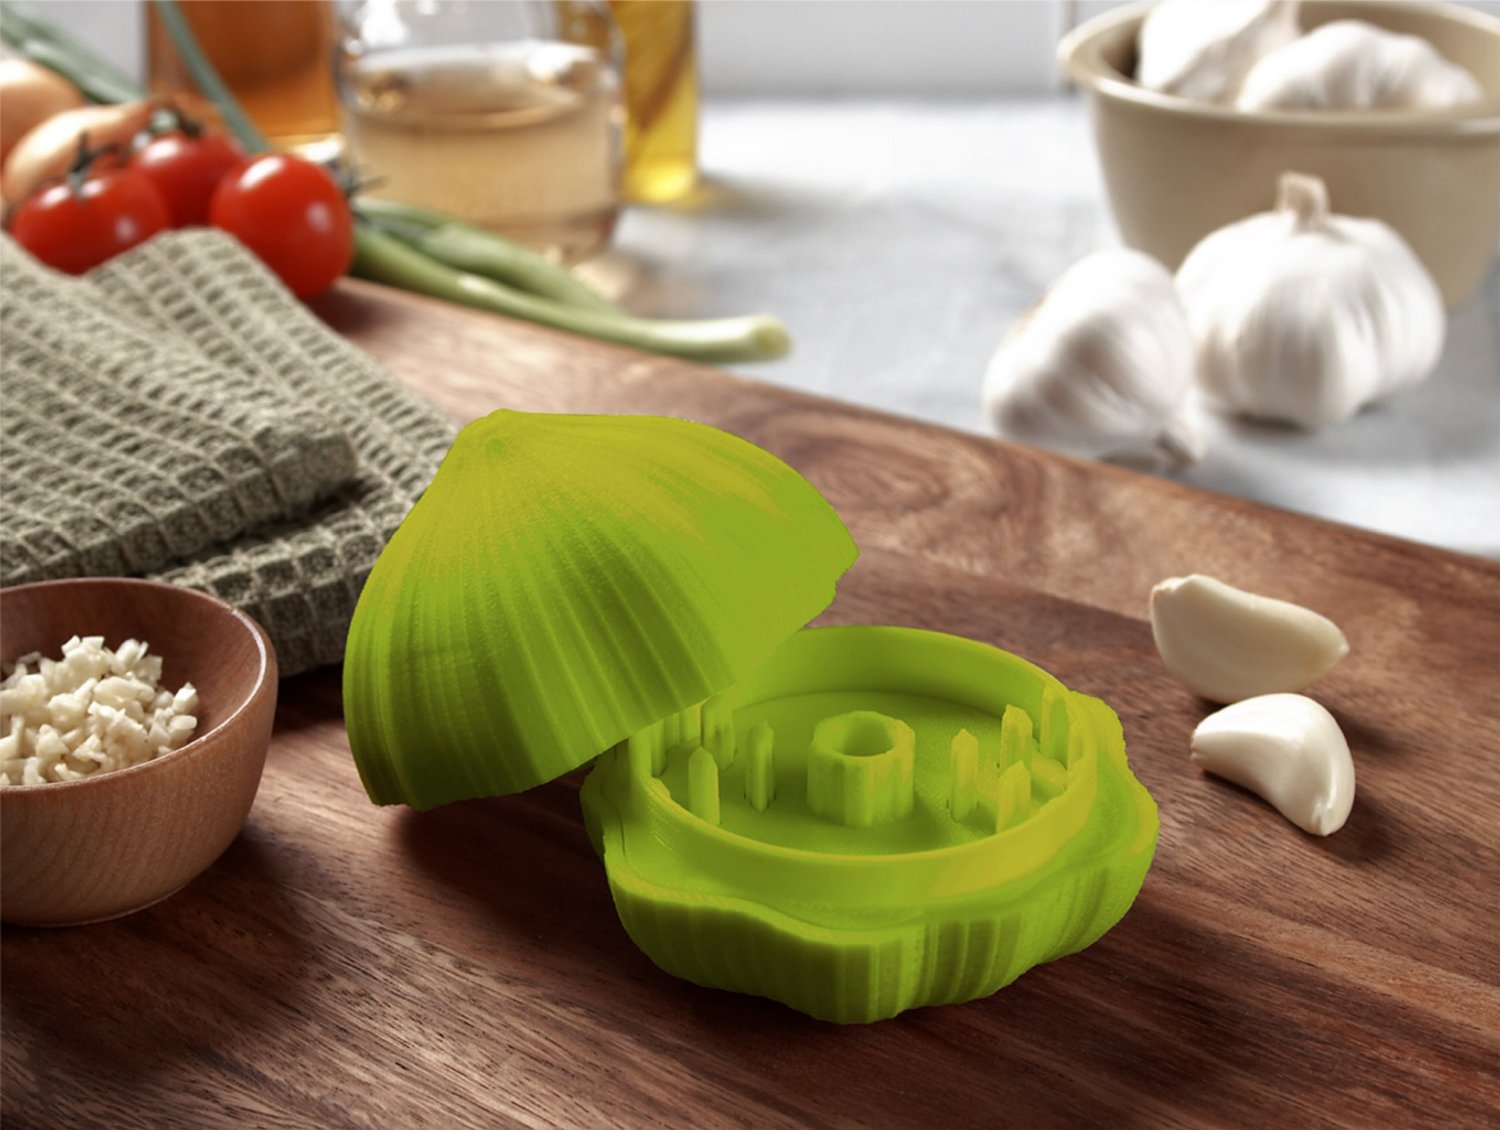 HIC Kitchen Spiral Vegetable Slicer